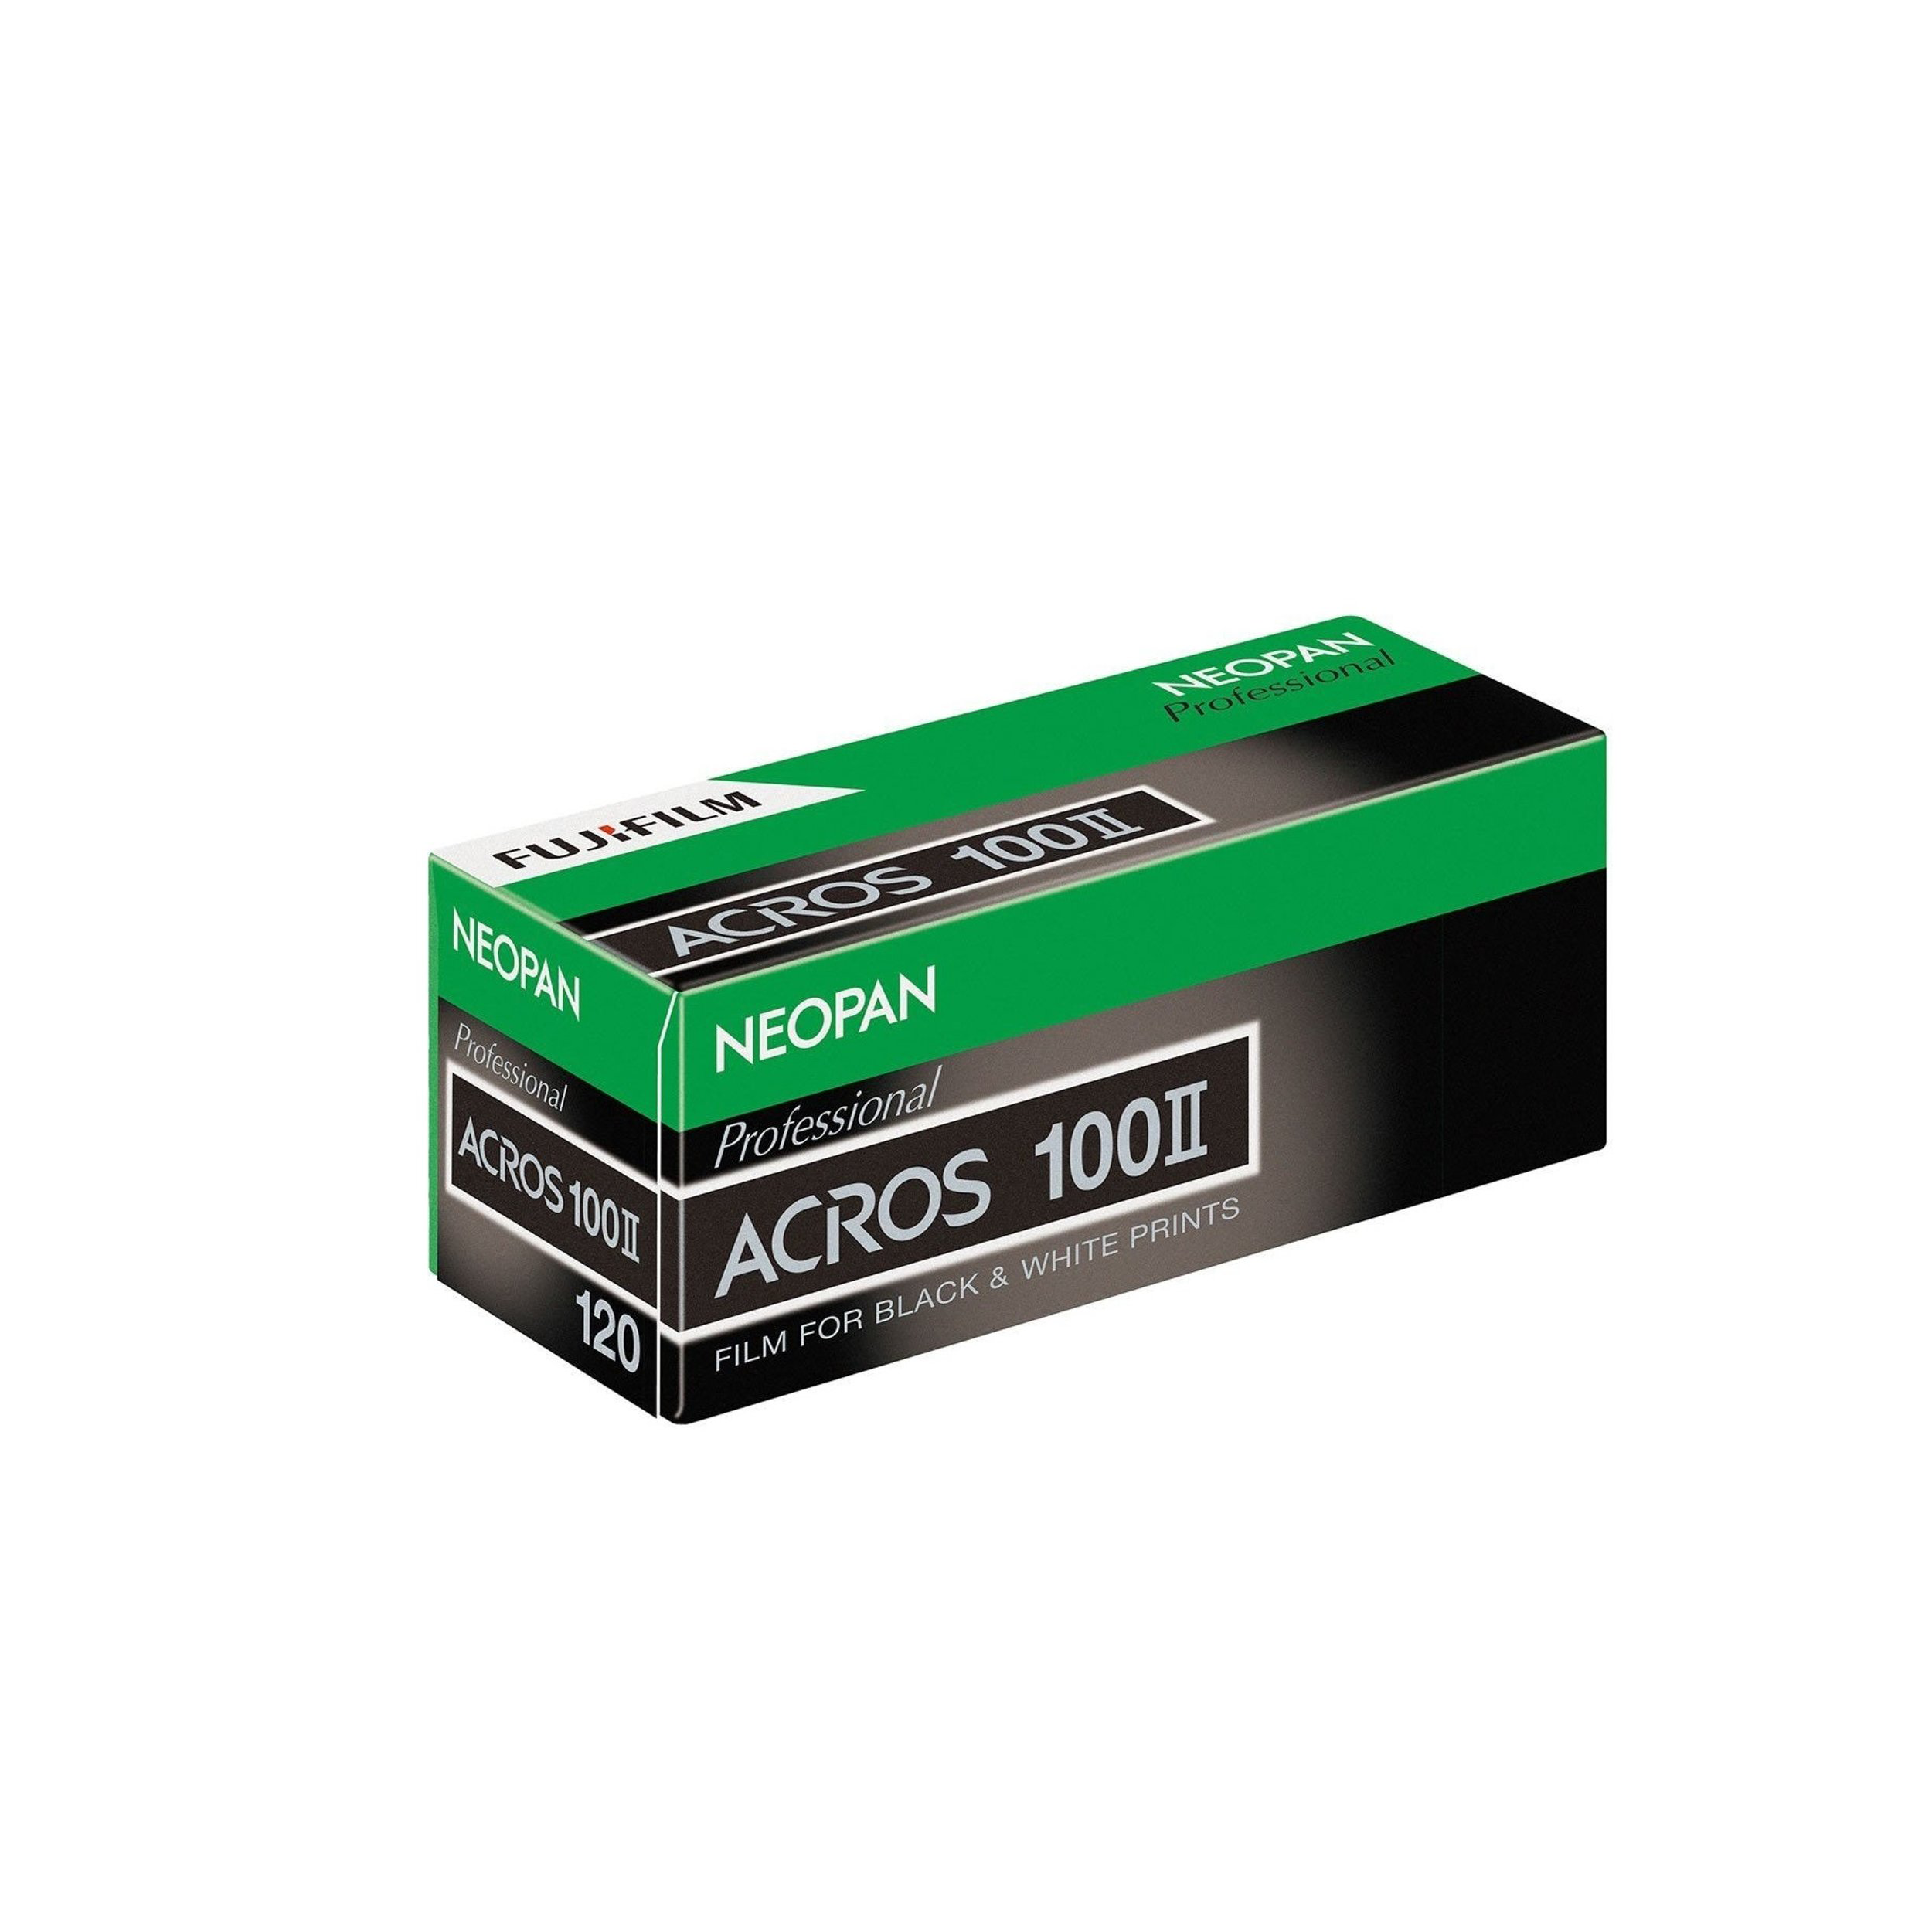 Fujifilm Neopan Acros II 100 ISO 120 Film  - Black and White - EXPIRED FILM